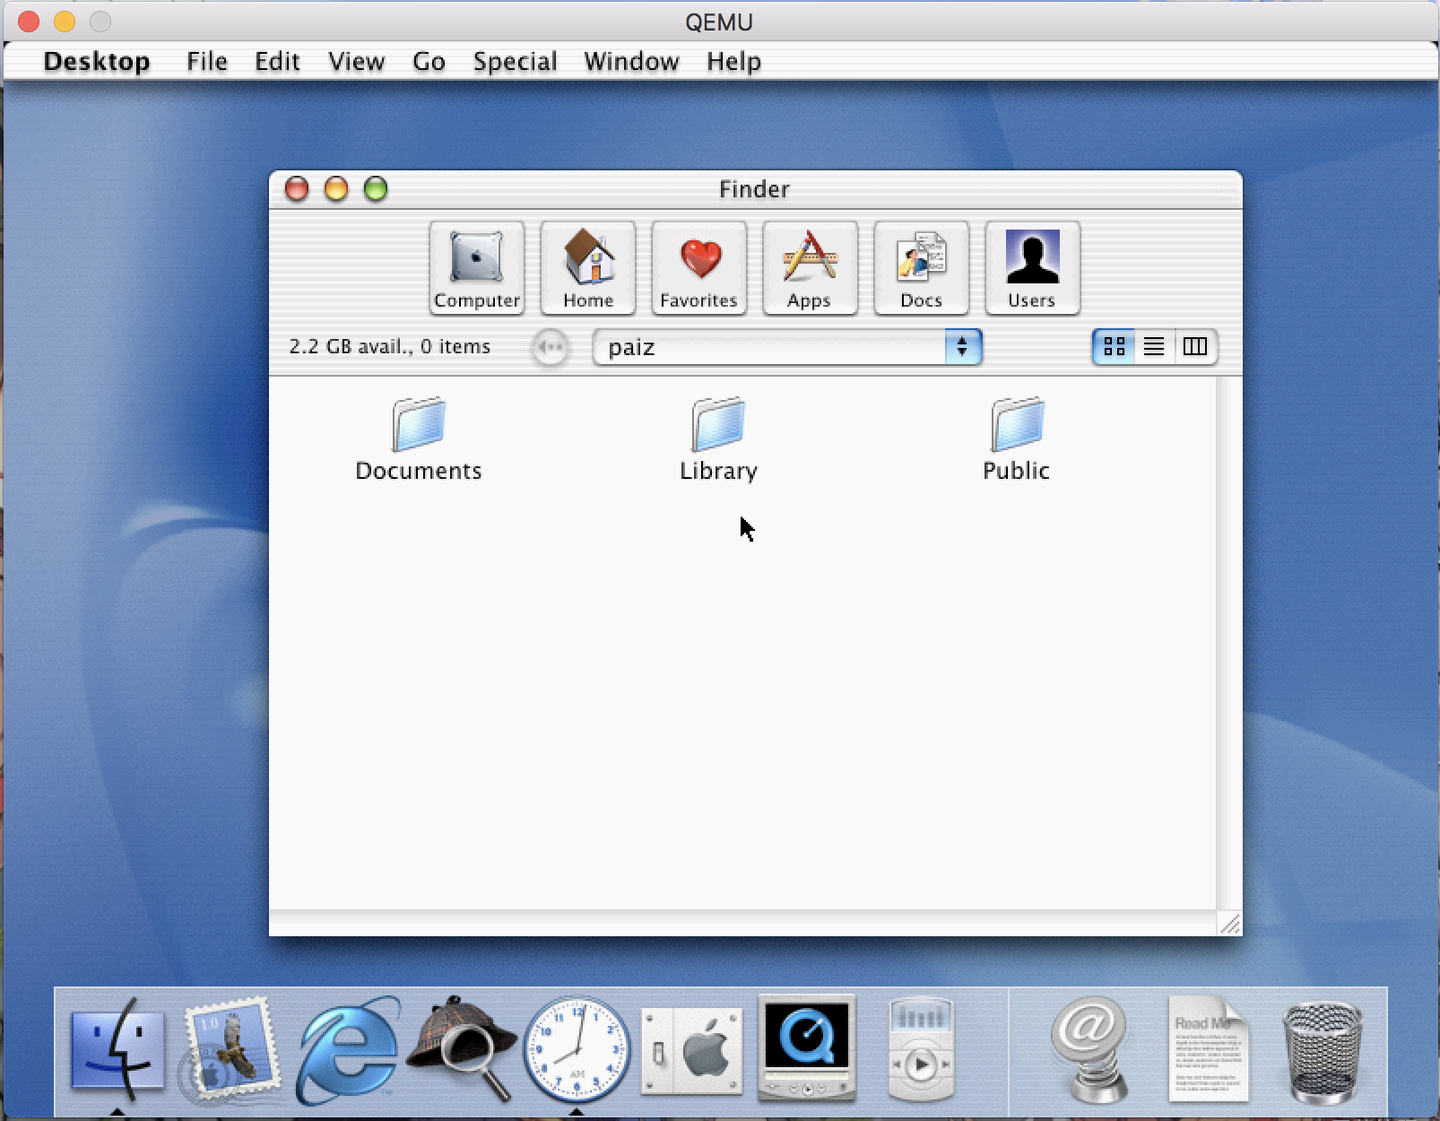 mac os 10.3 image file for qemu